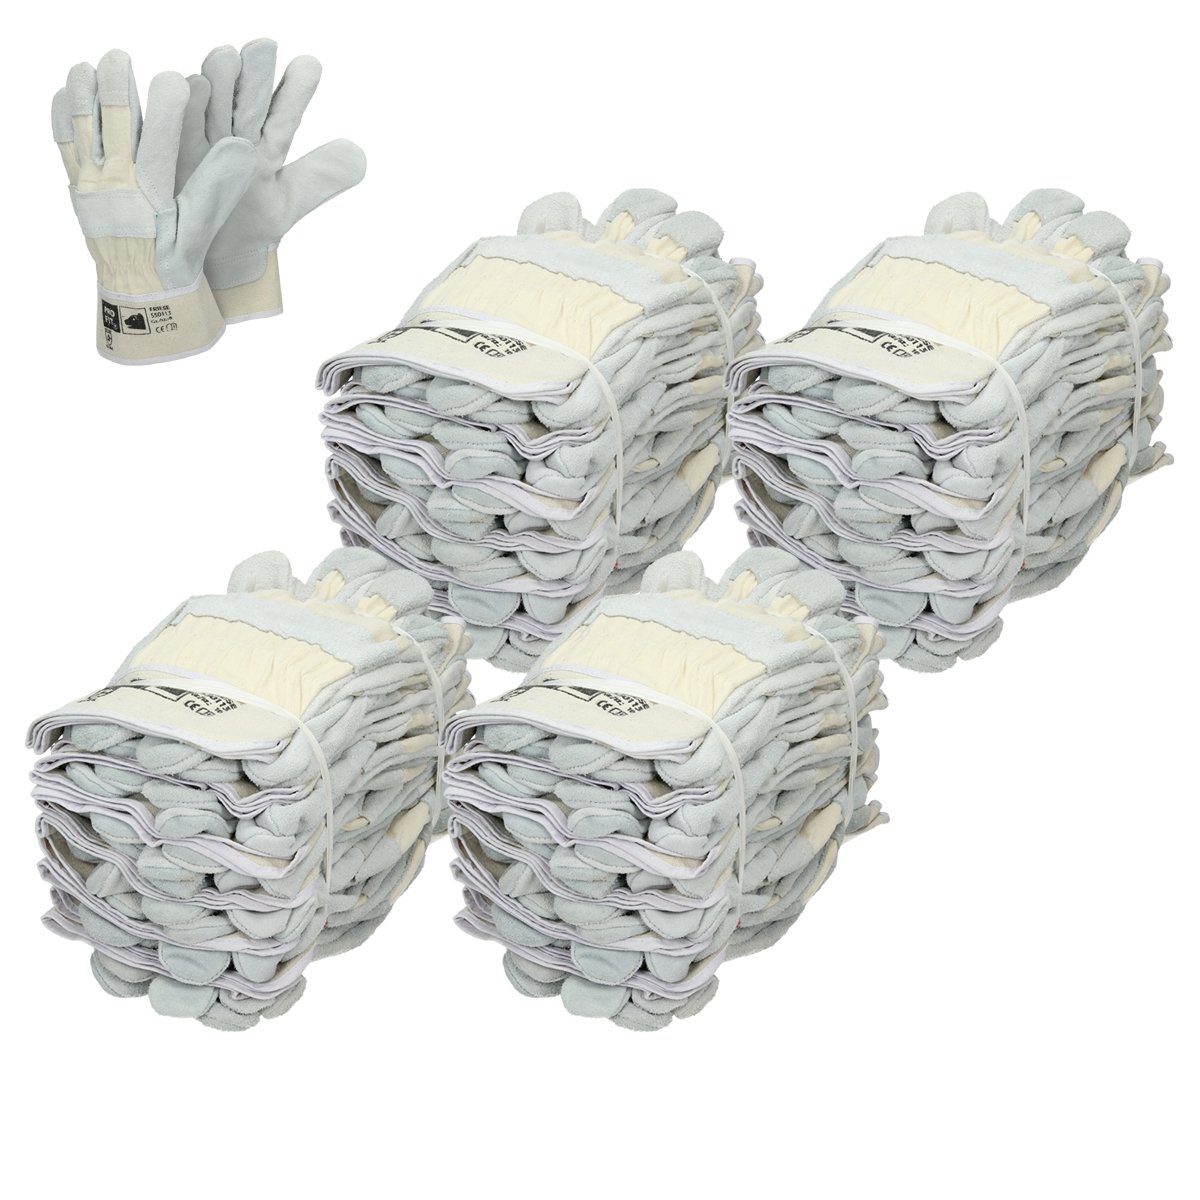 Germany 8/M 48 Rindspaltleder-Handschuhe Pro-Fit® Natur Canvas-Stulpe Paar Rindspalt Größe Gartenhandschuhe Arbeitshandschuh-Set ECD Handschuhe Leder Schutzhandschuhe